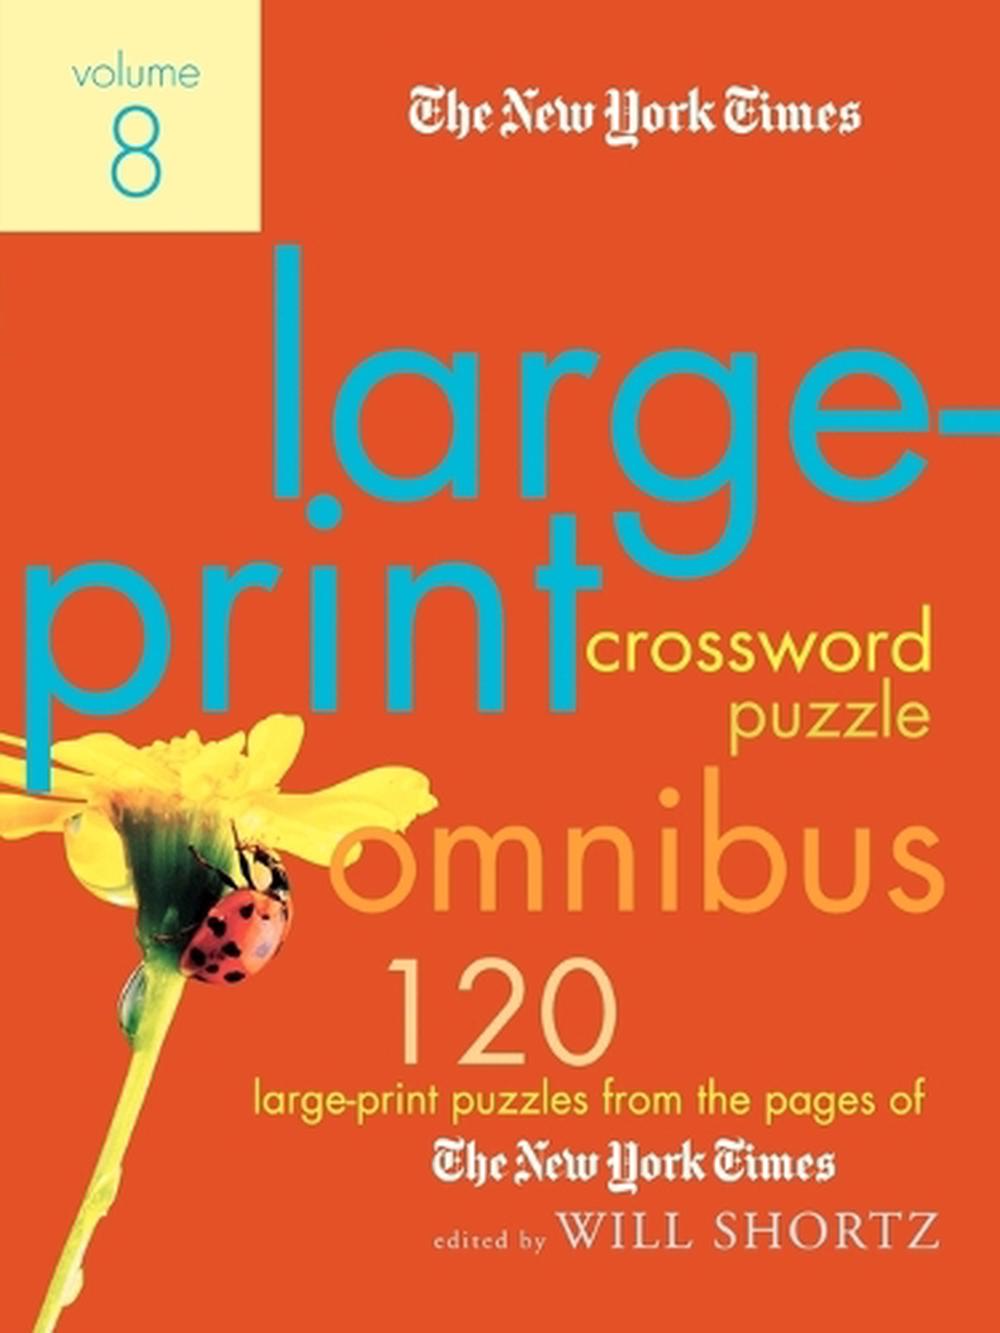 the-new-york-times-large-print-crossword-puzzle-omnibus-volume-8-120